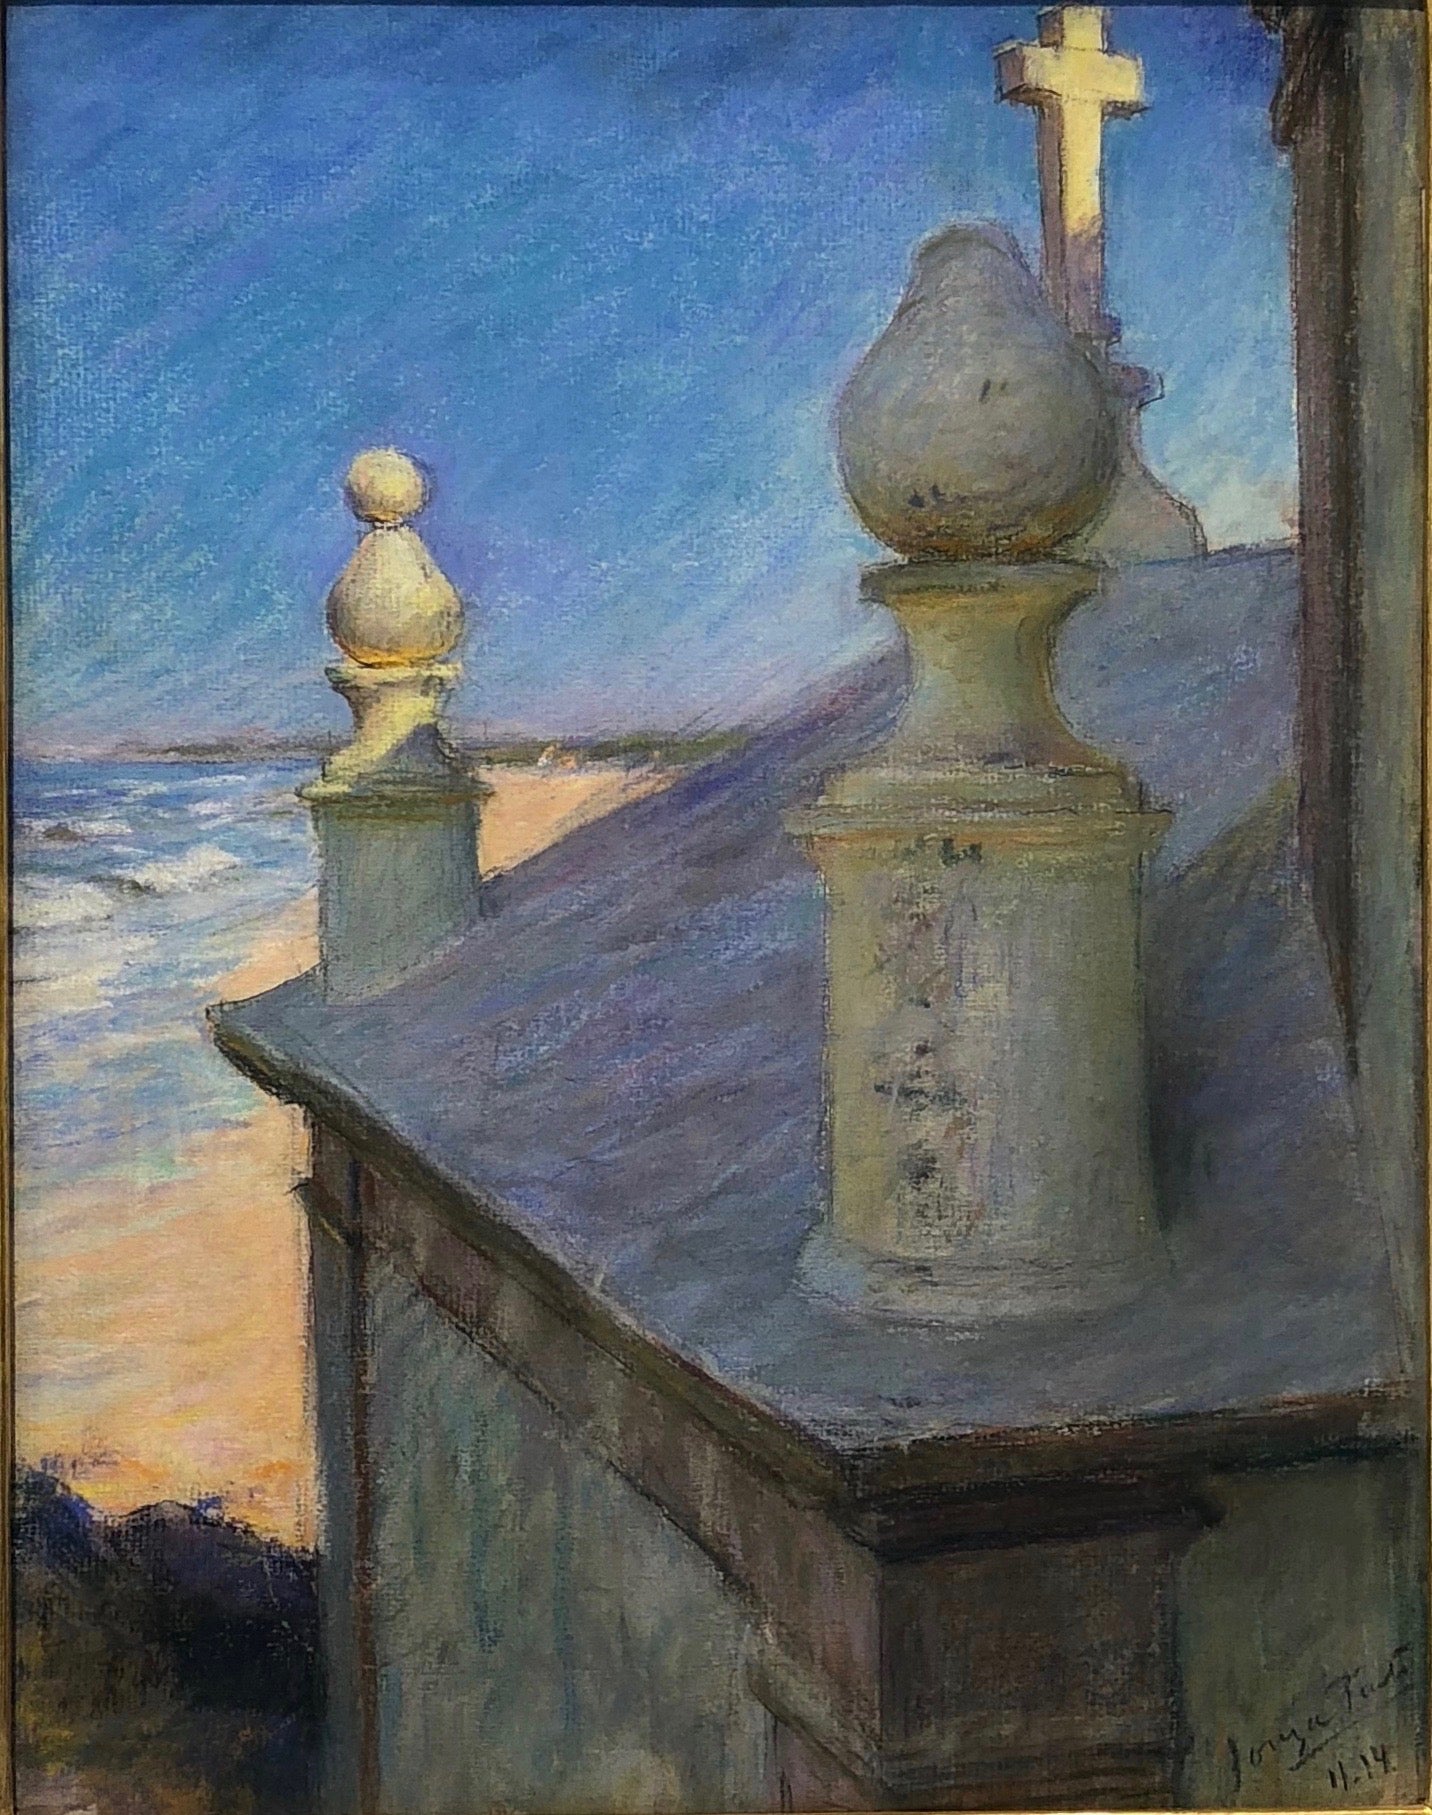 Souza Pinto, "Ermida junto à praia", 1914